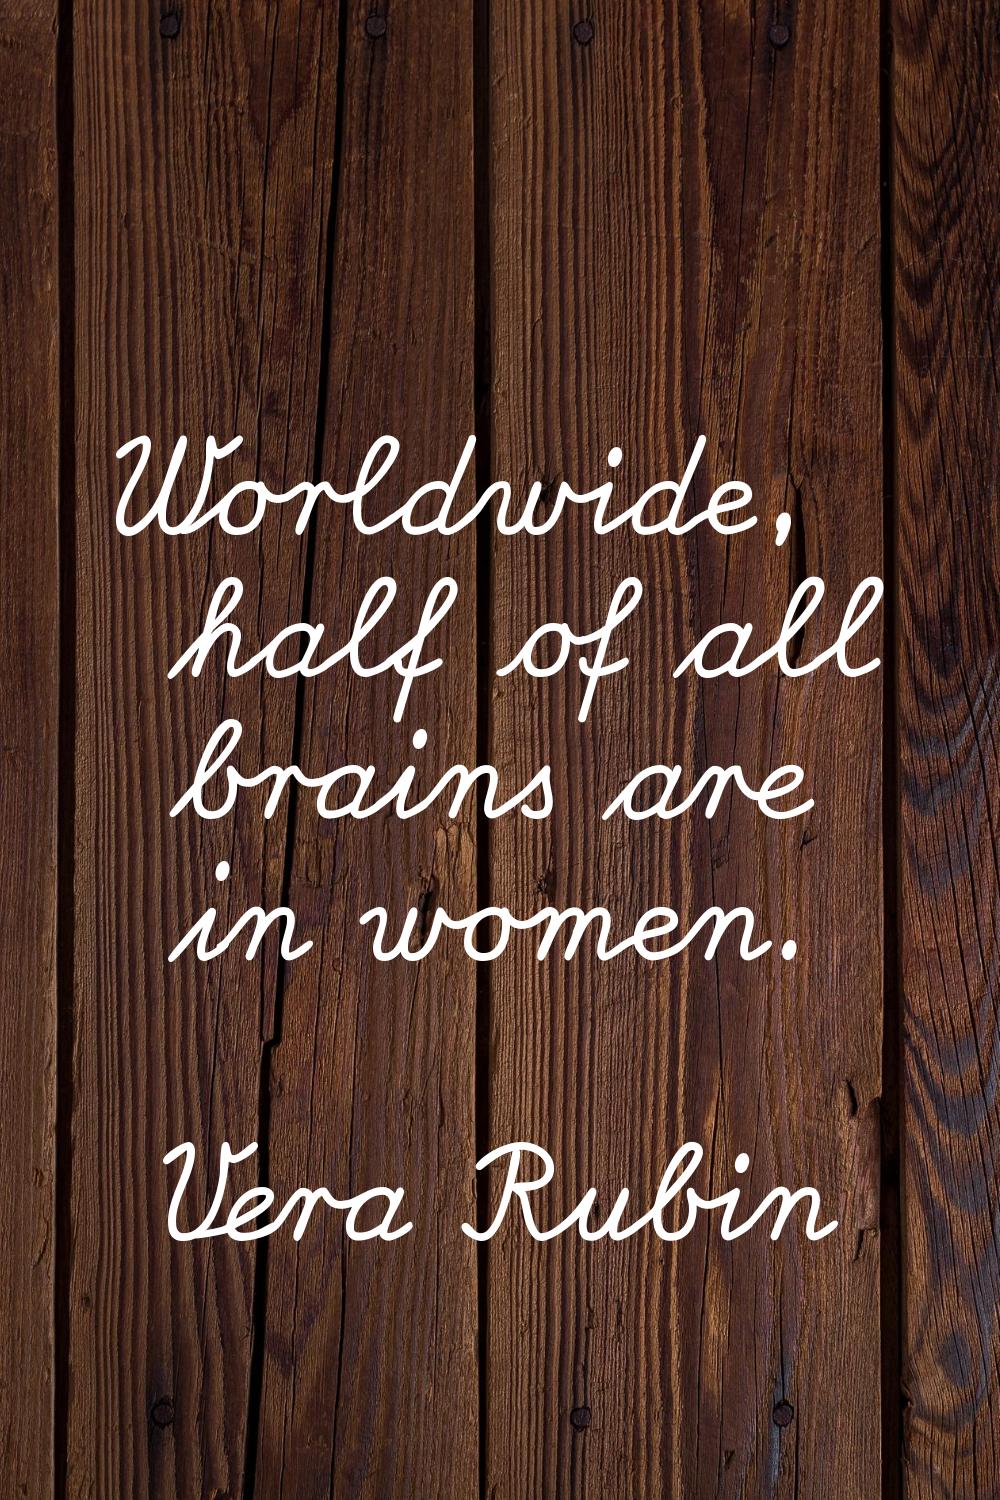 Worldwide, half of all brains are in women.